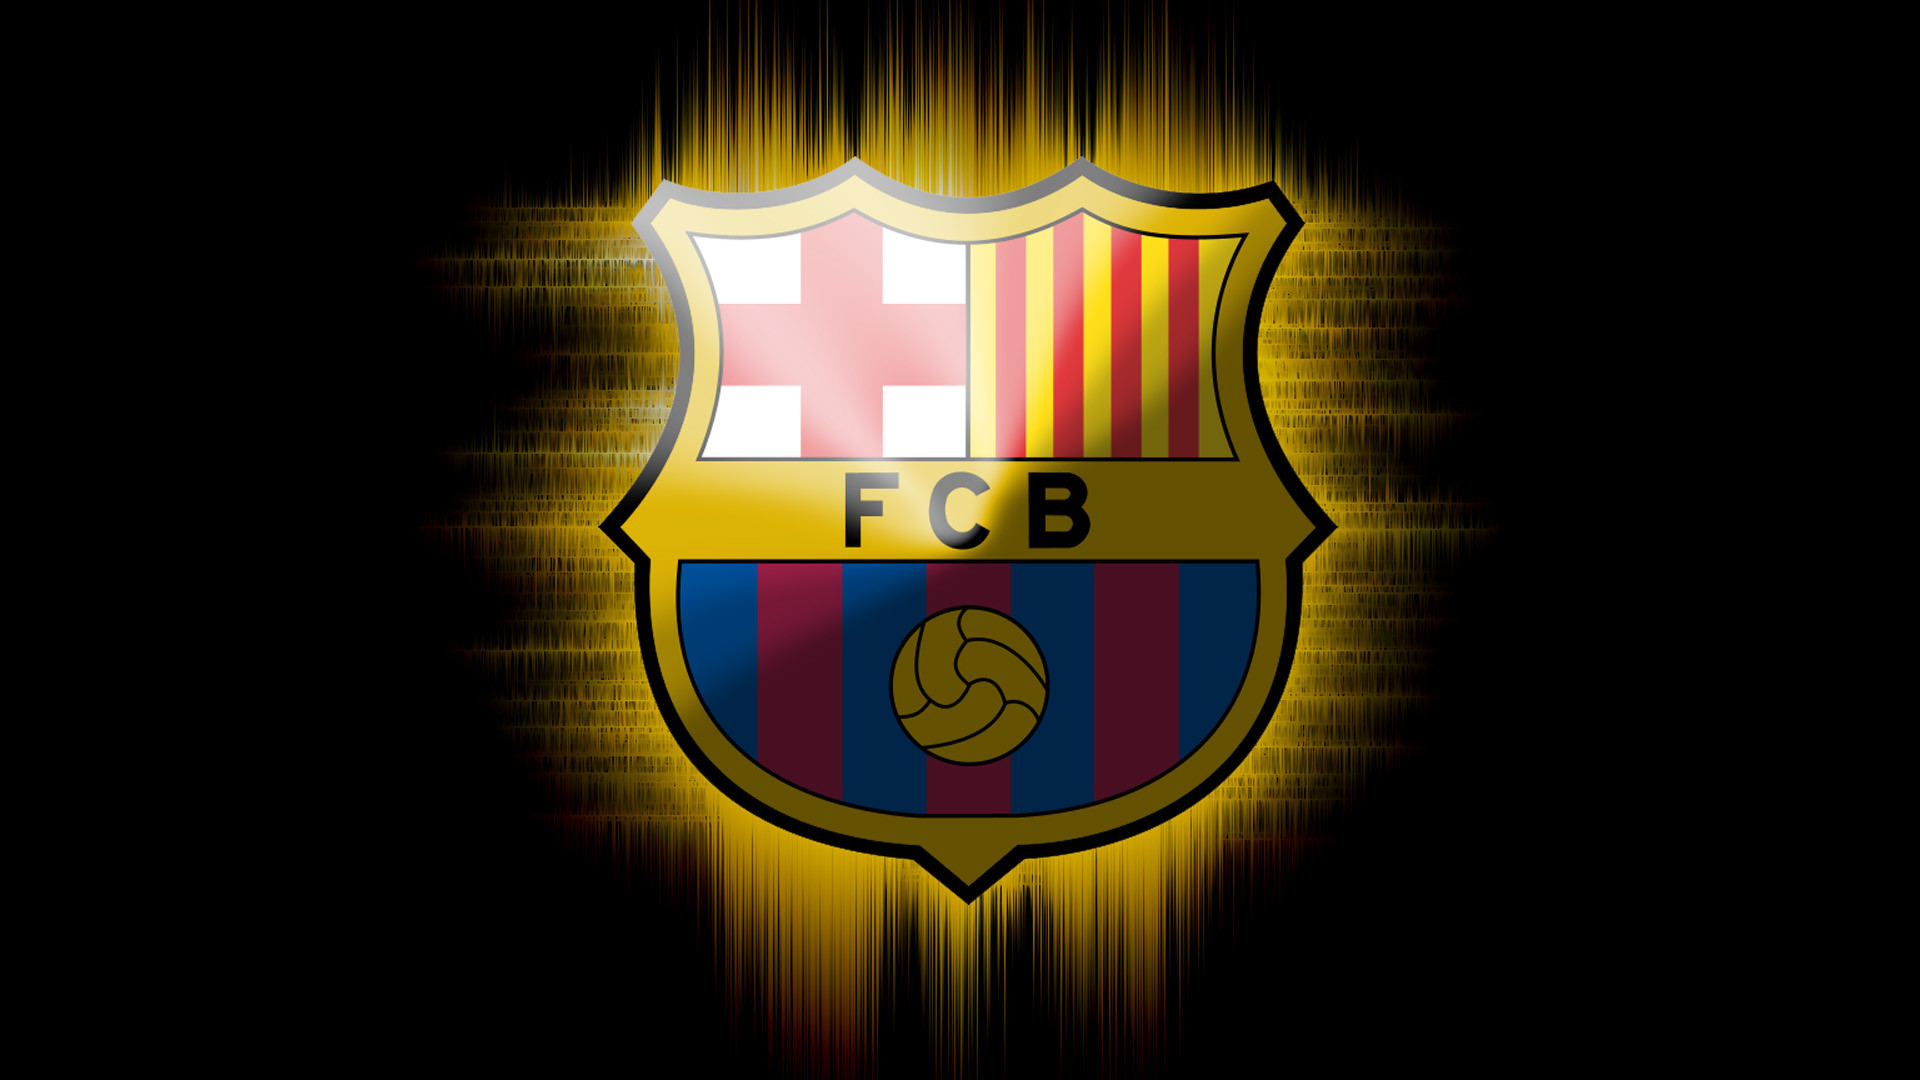  Logo  Barcelona  Wallpaper Terbaru 2021   WallpaperTag